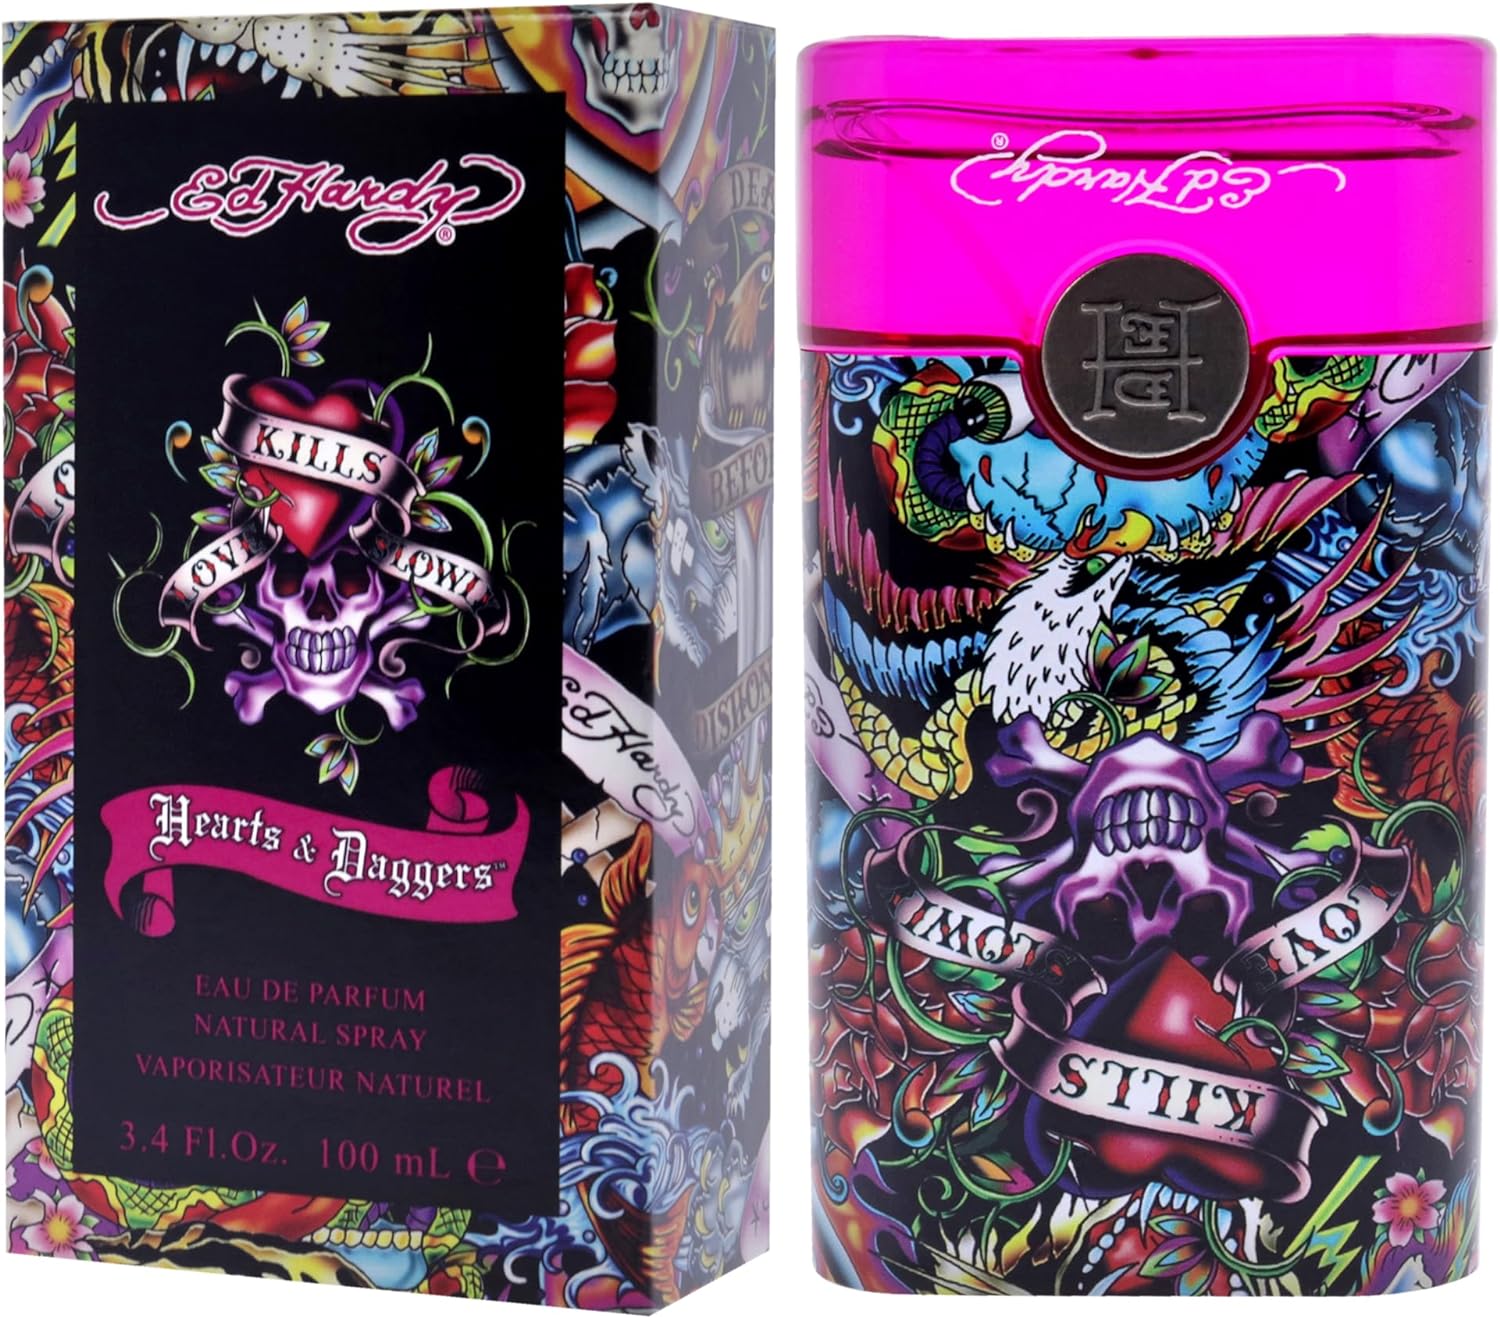 Ed Hardy Hearts & Daggers by Christian Audigier 100 ml Eau De Perfume Spray for Women